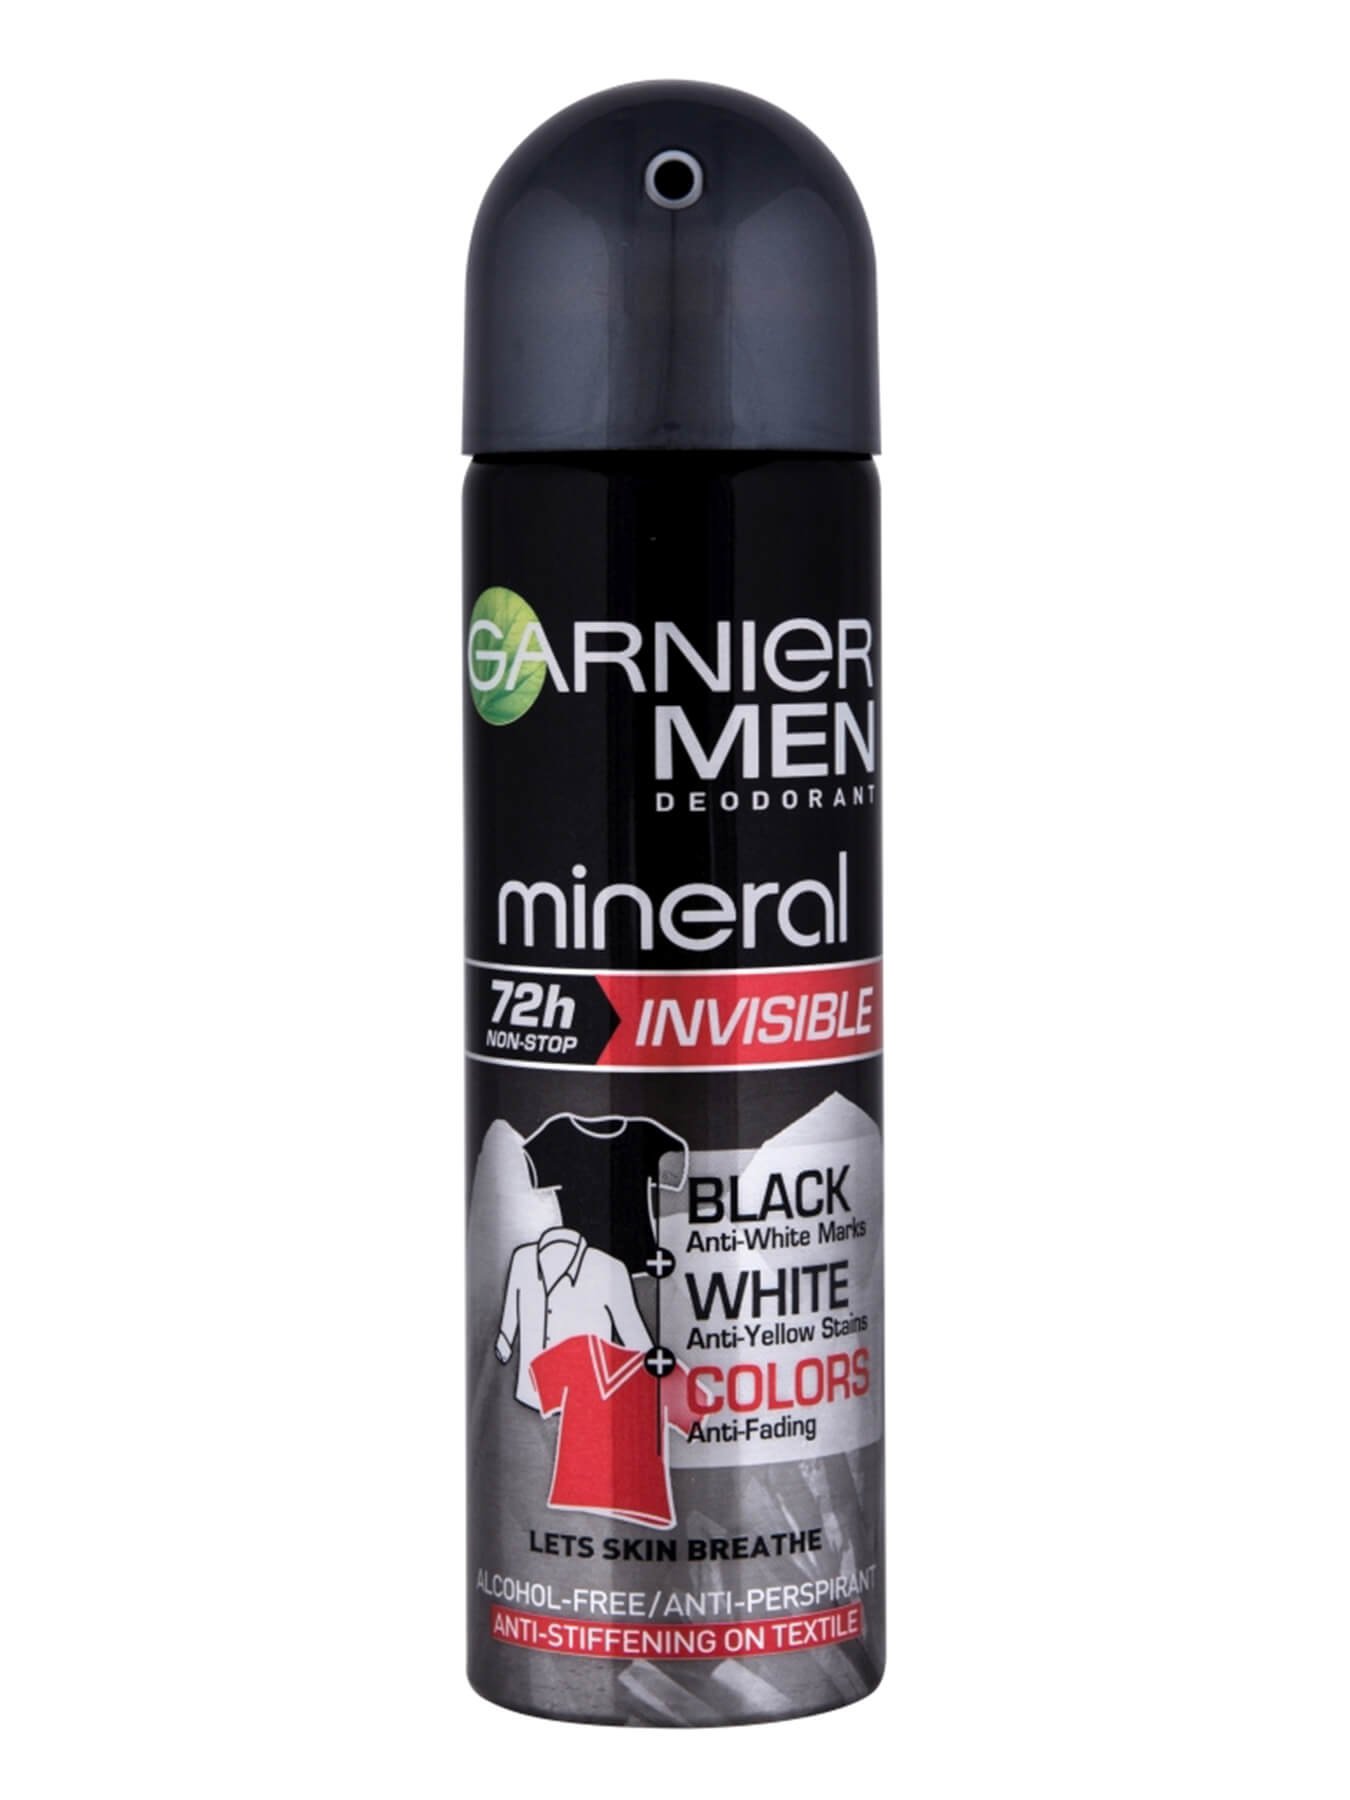 Garnier Mineral Deo Men Invisi Black, White&Colors Спрей 